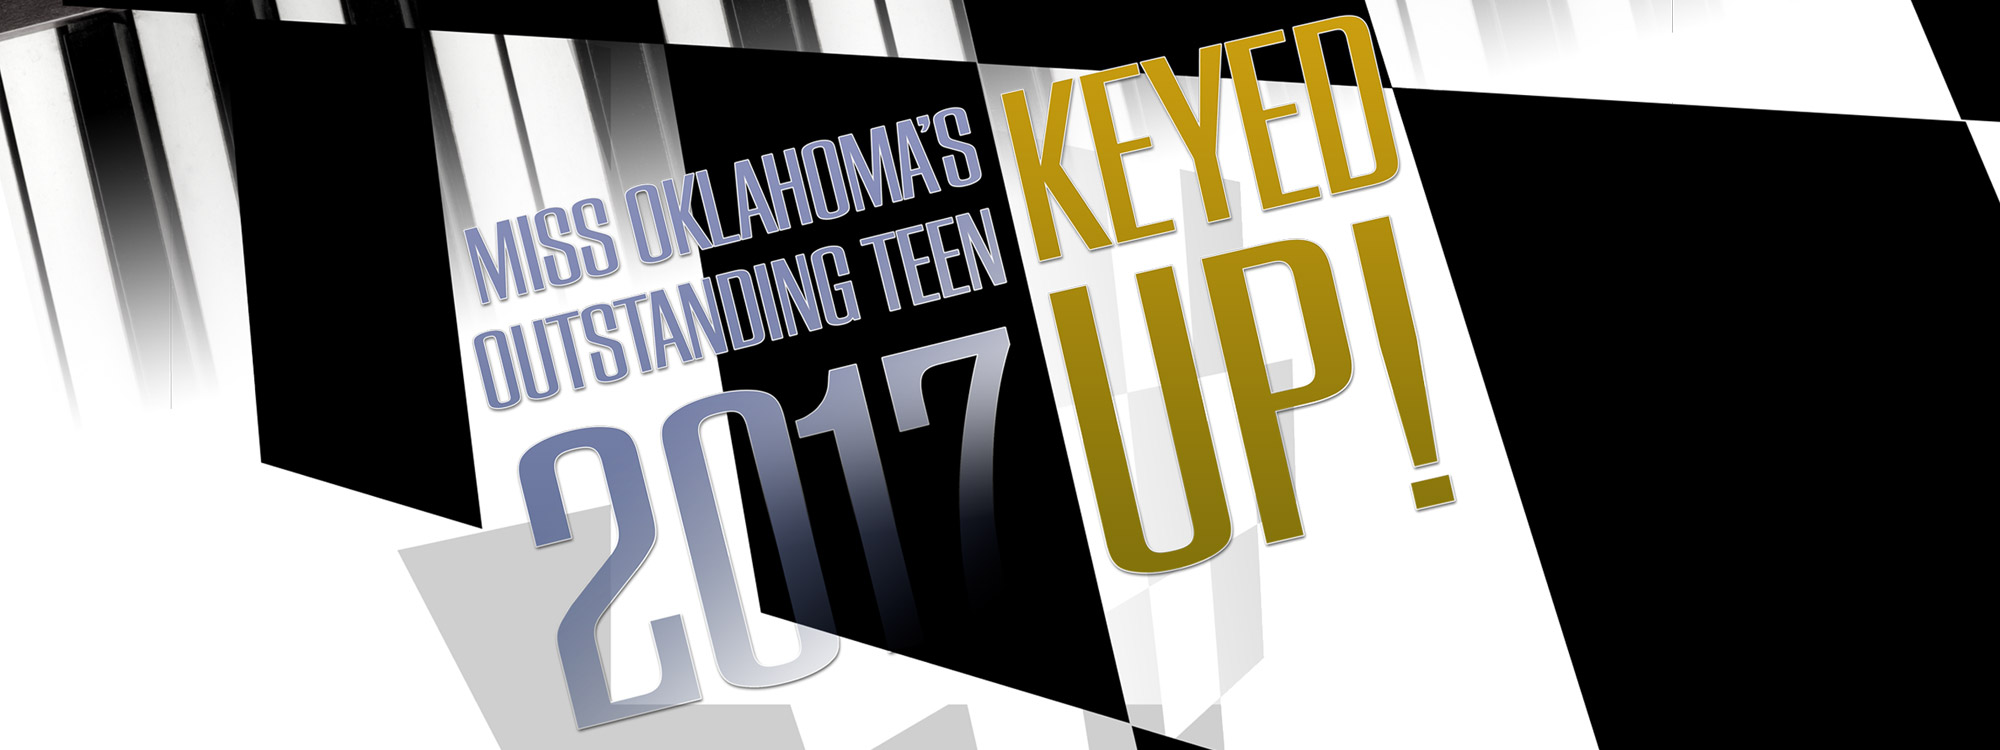 Miss Oklahoma's Outstanding Teen 2017